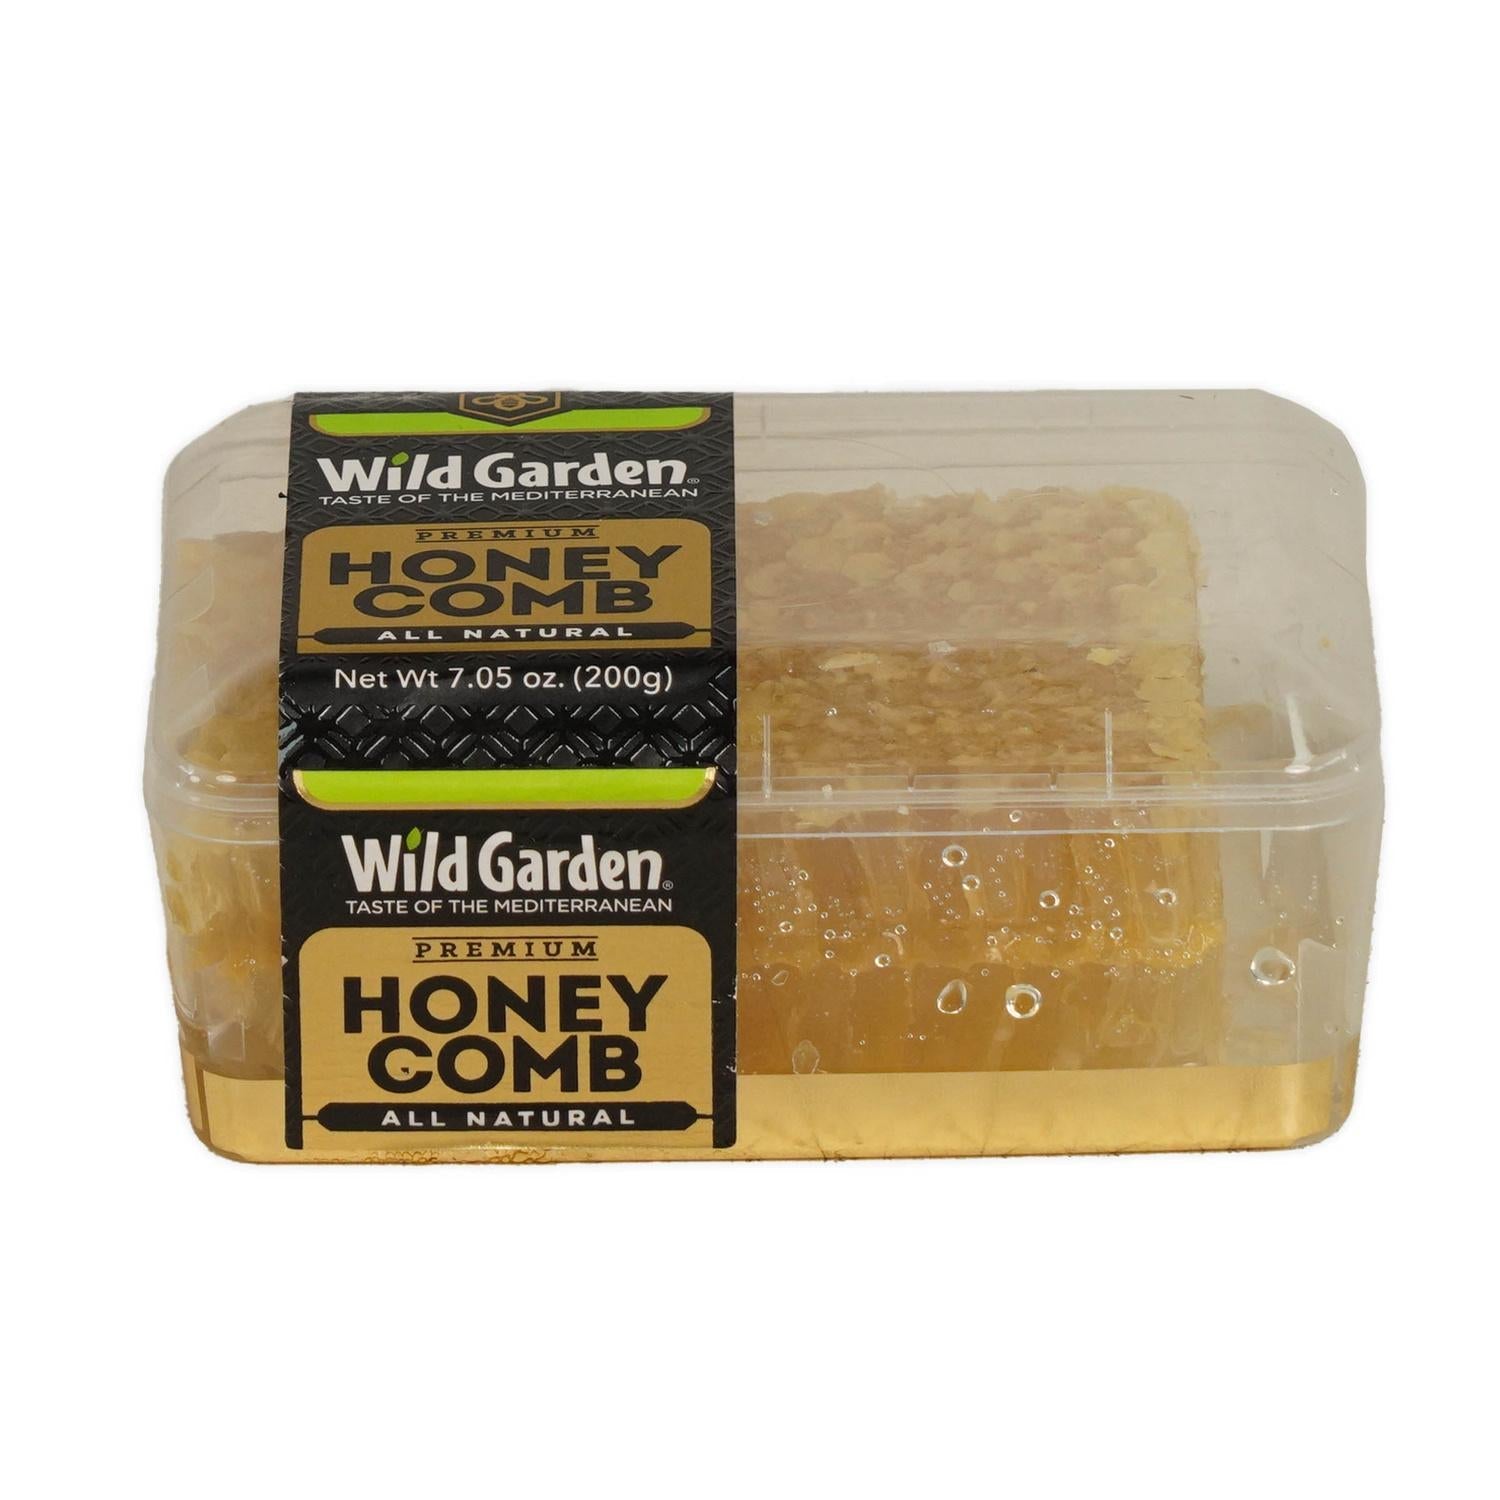 Wild Garden Honey Comb 7.05 oz Clamshell